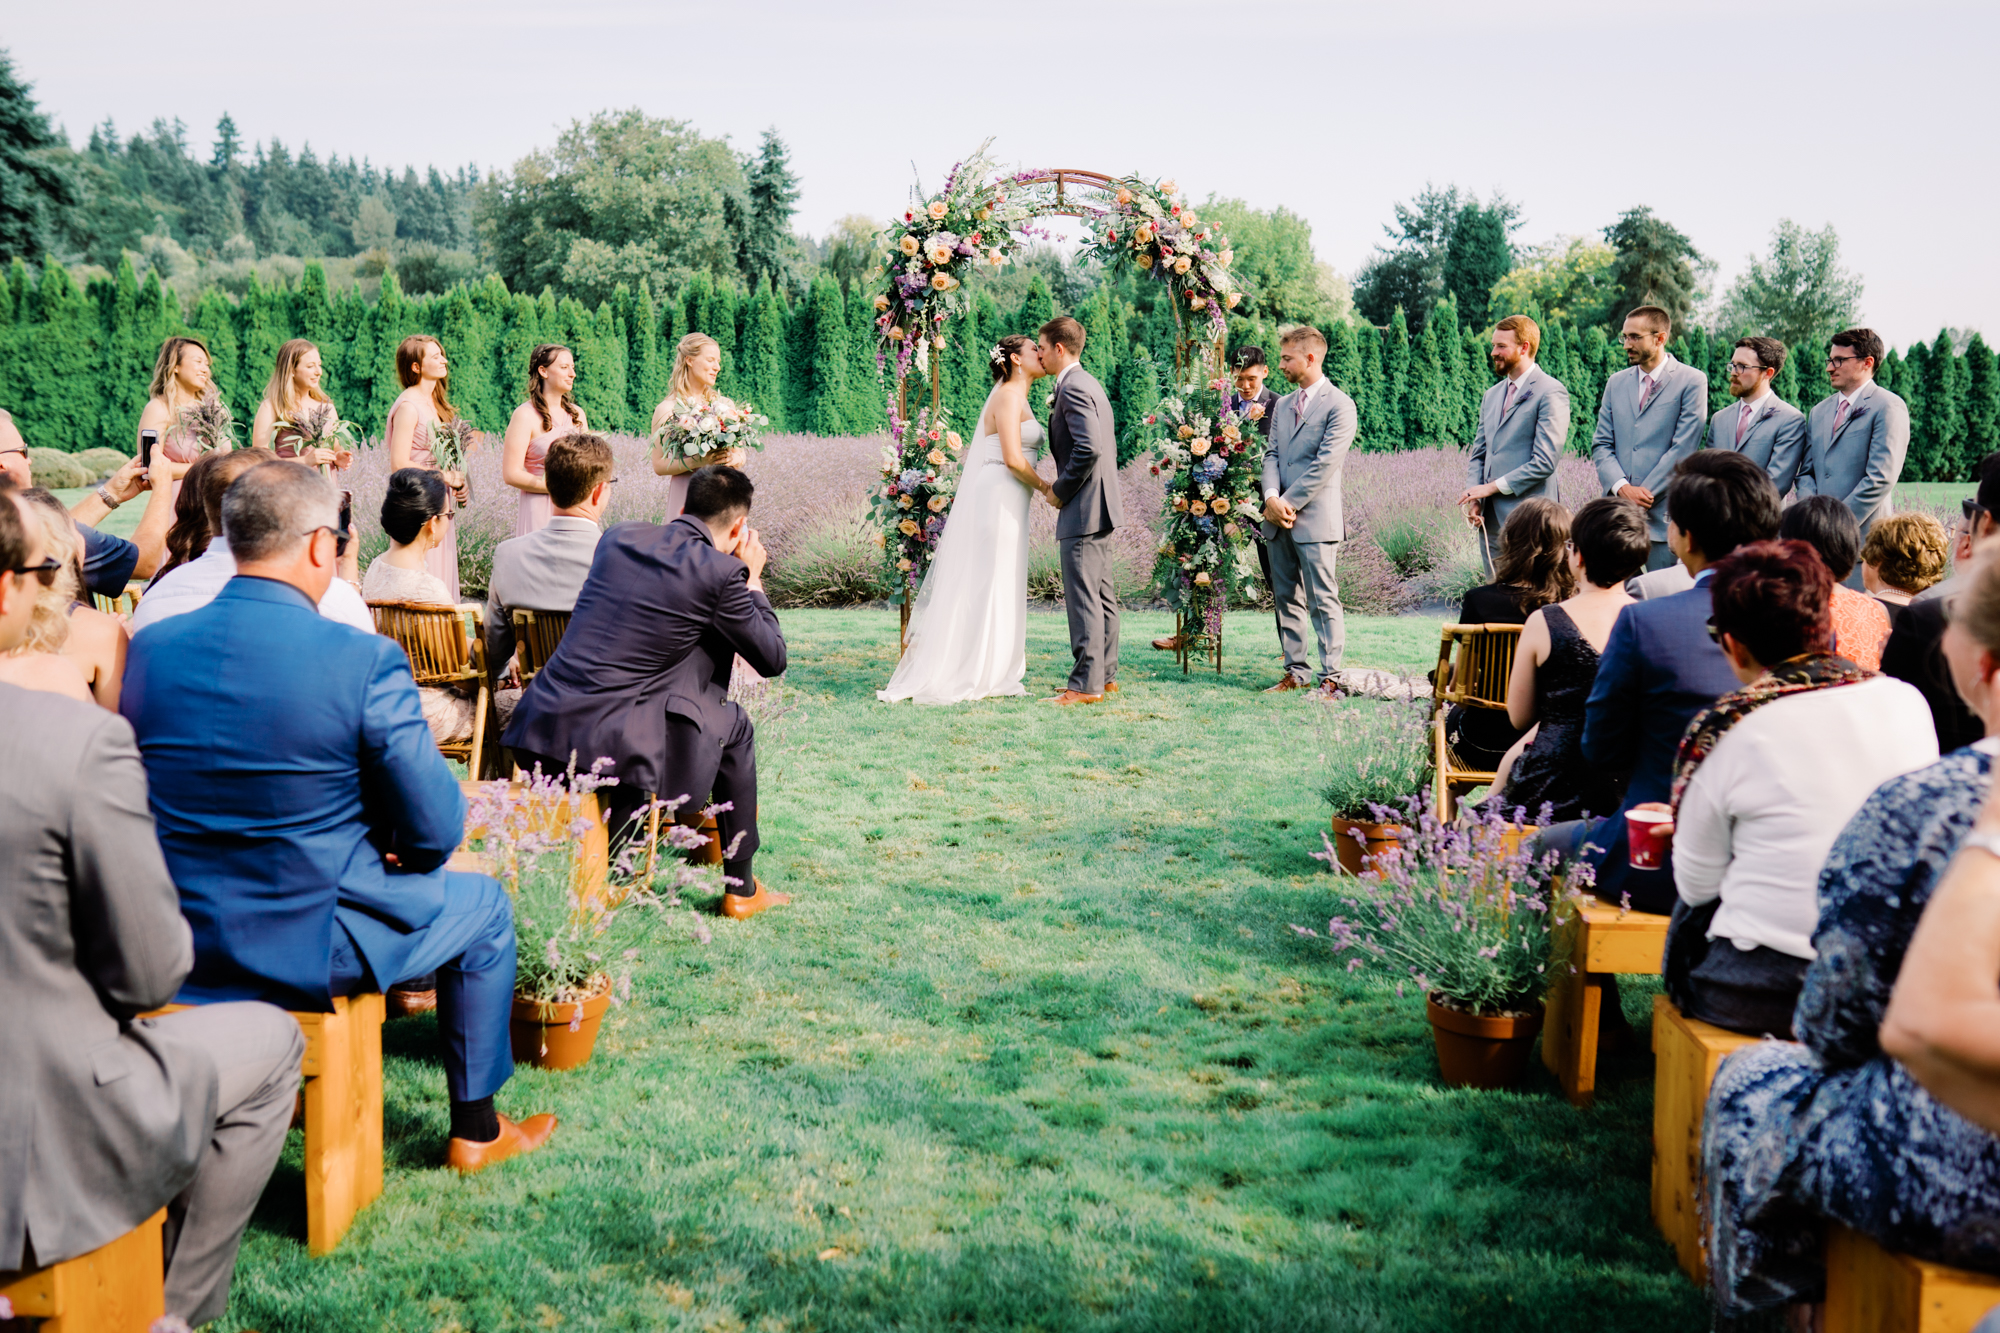 Woodinville Lavender Farm weddings: The kiss!